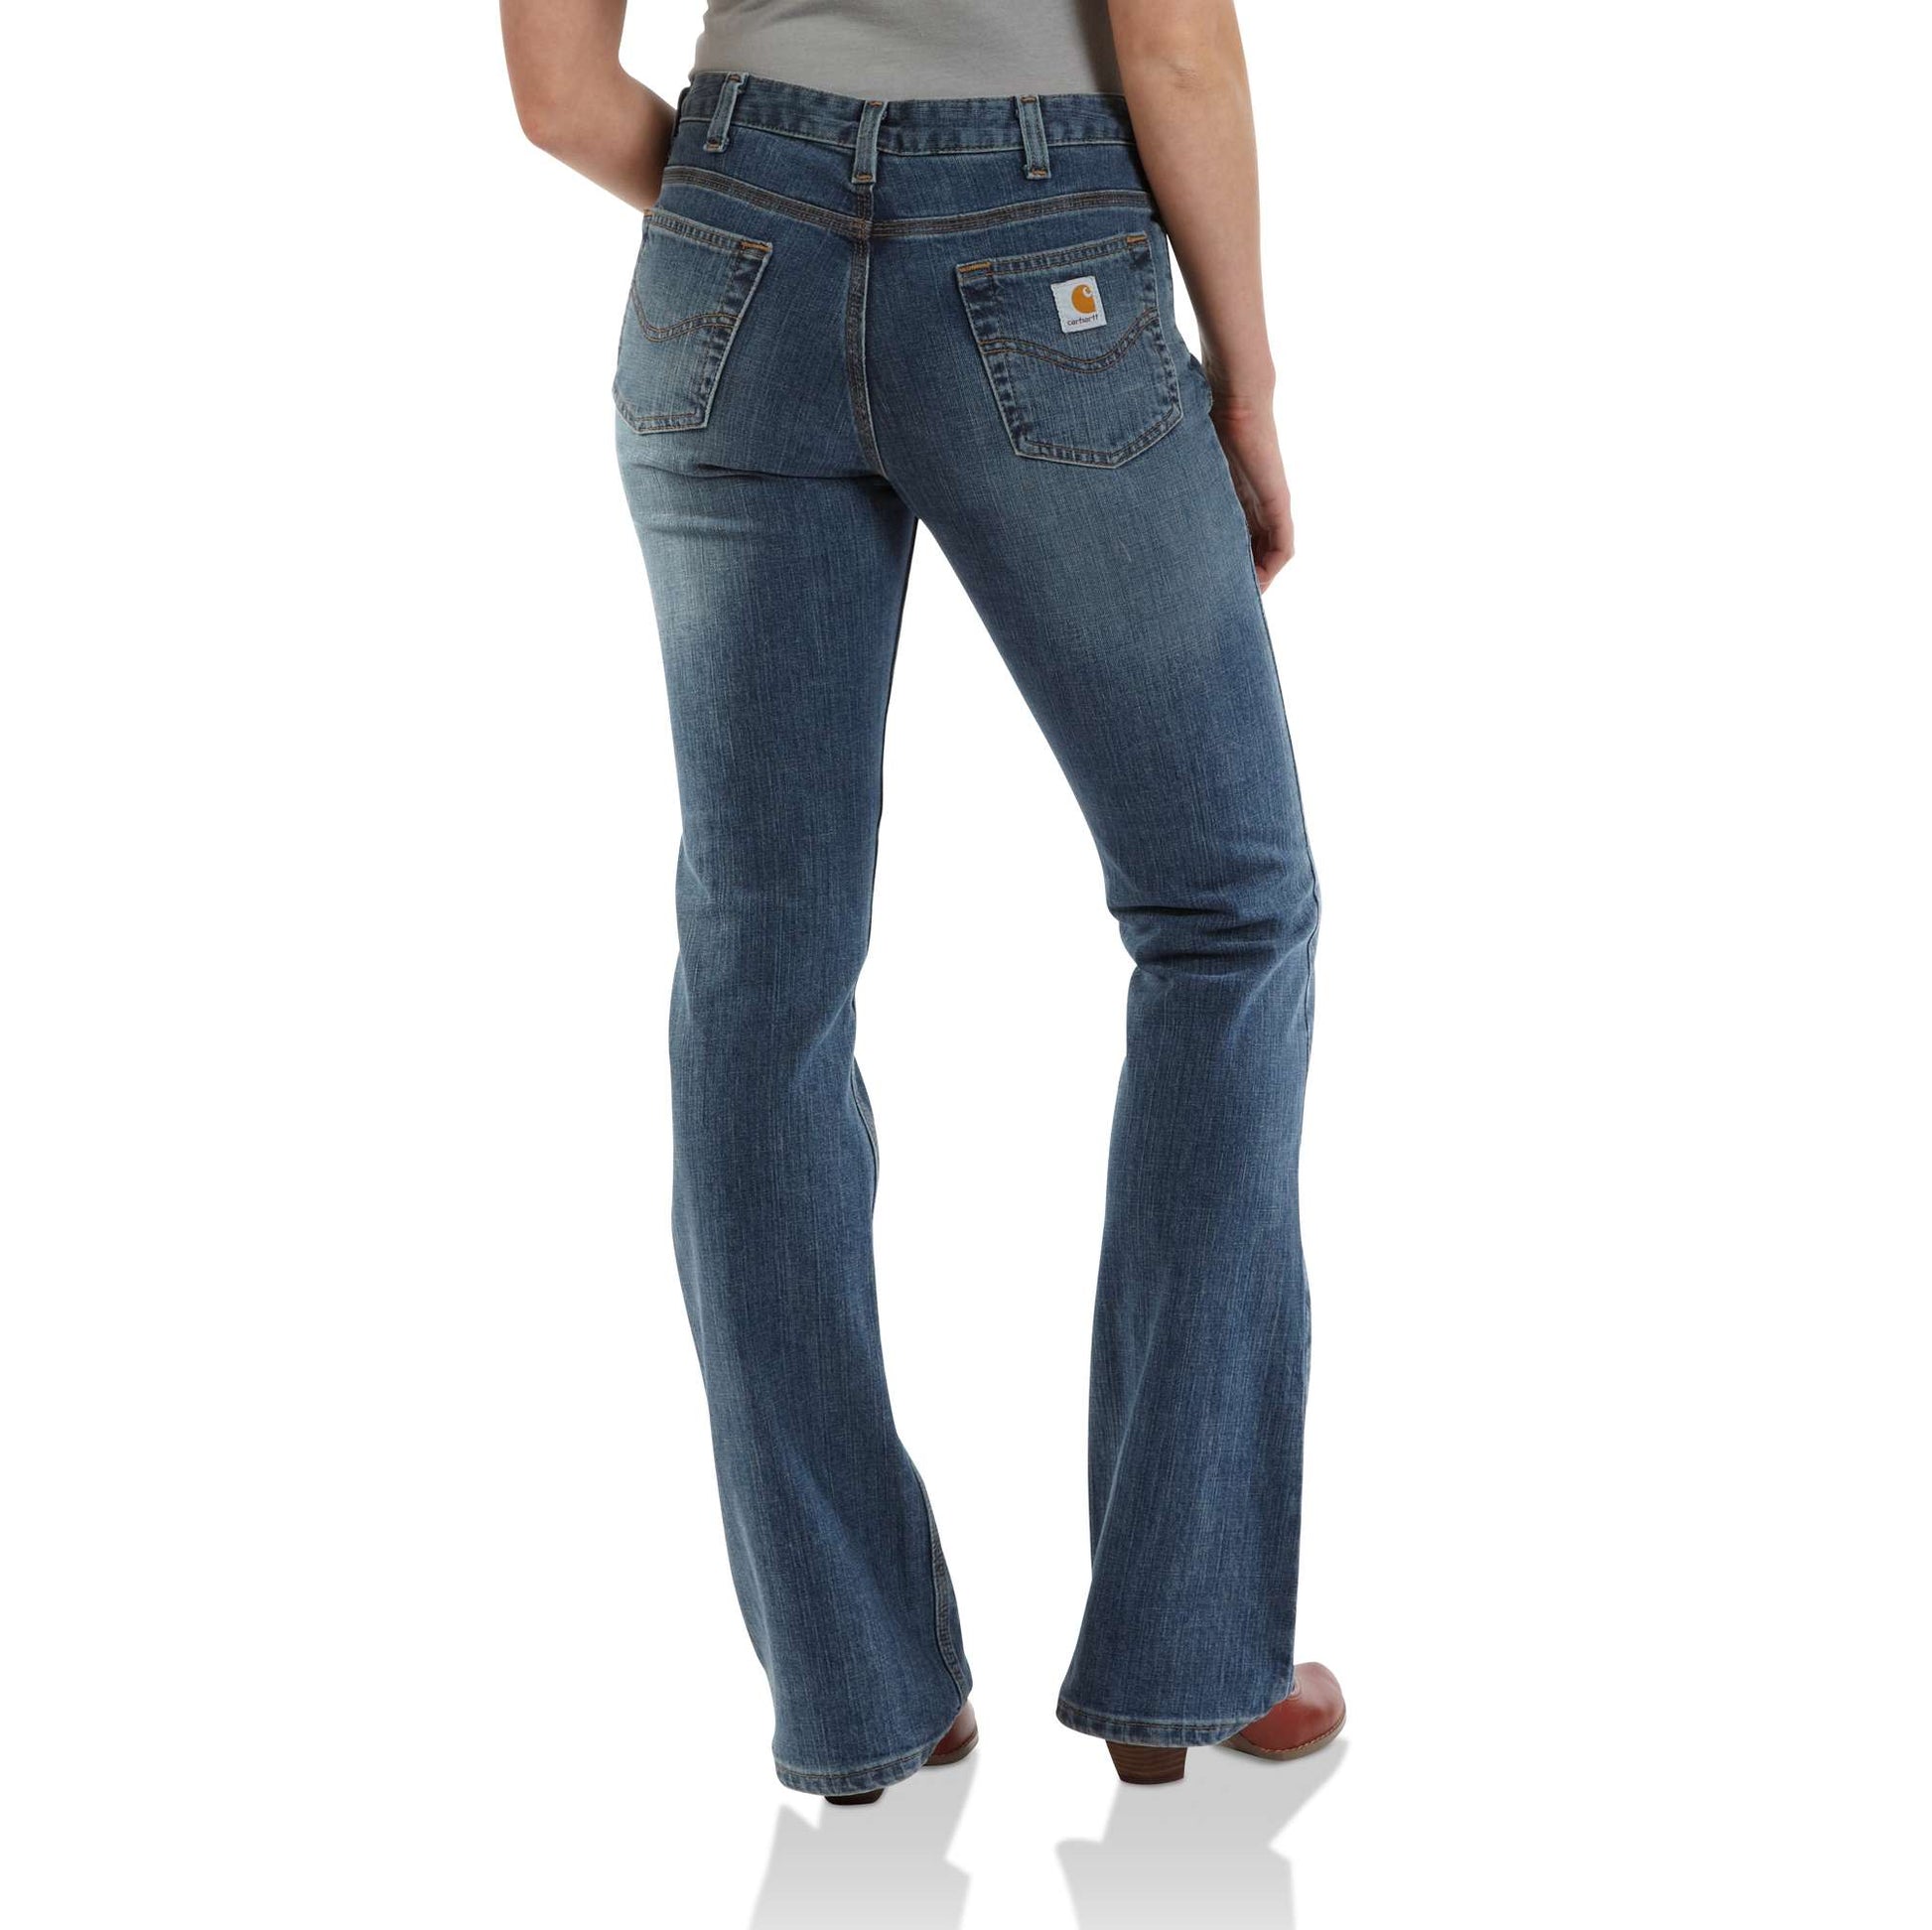 Carhartt Jeans: Women's Faded Indigo WB041 FBI Original Fit Bootcut Jeans